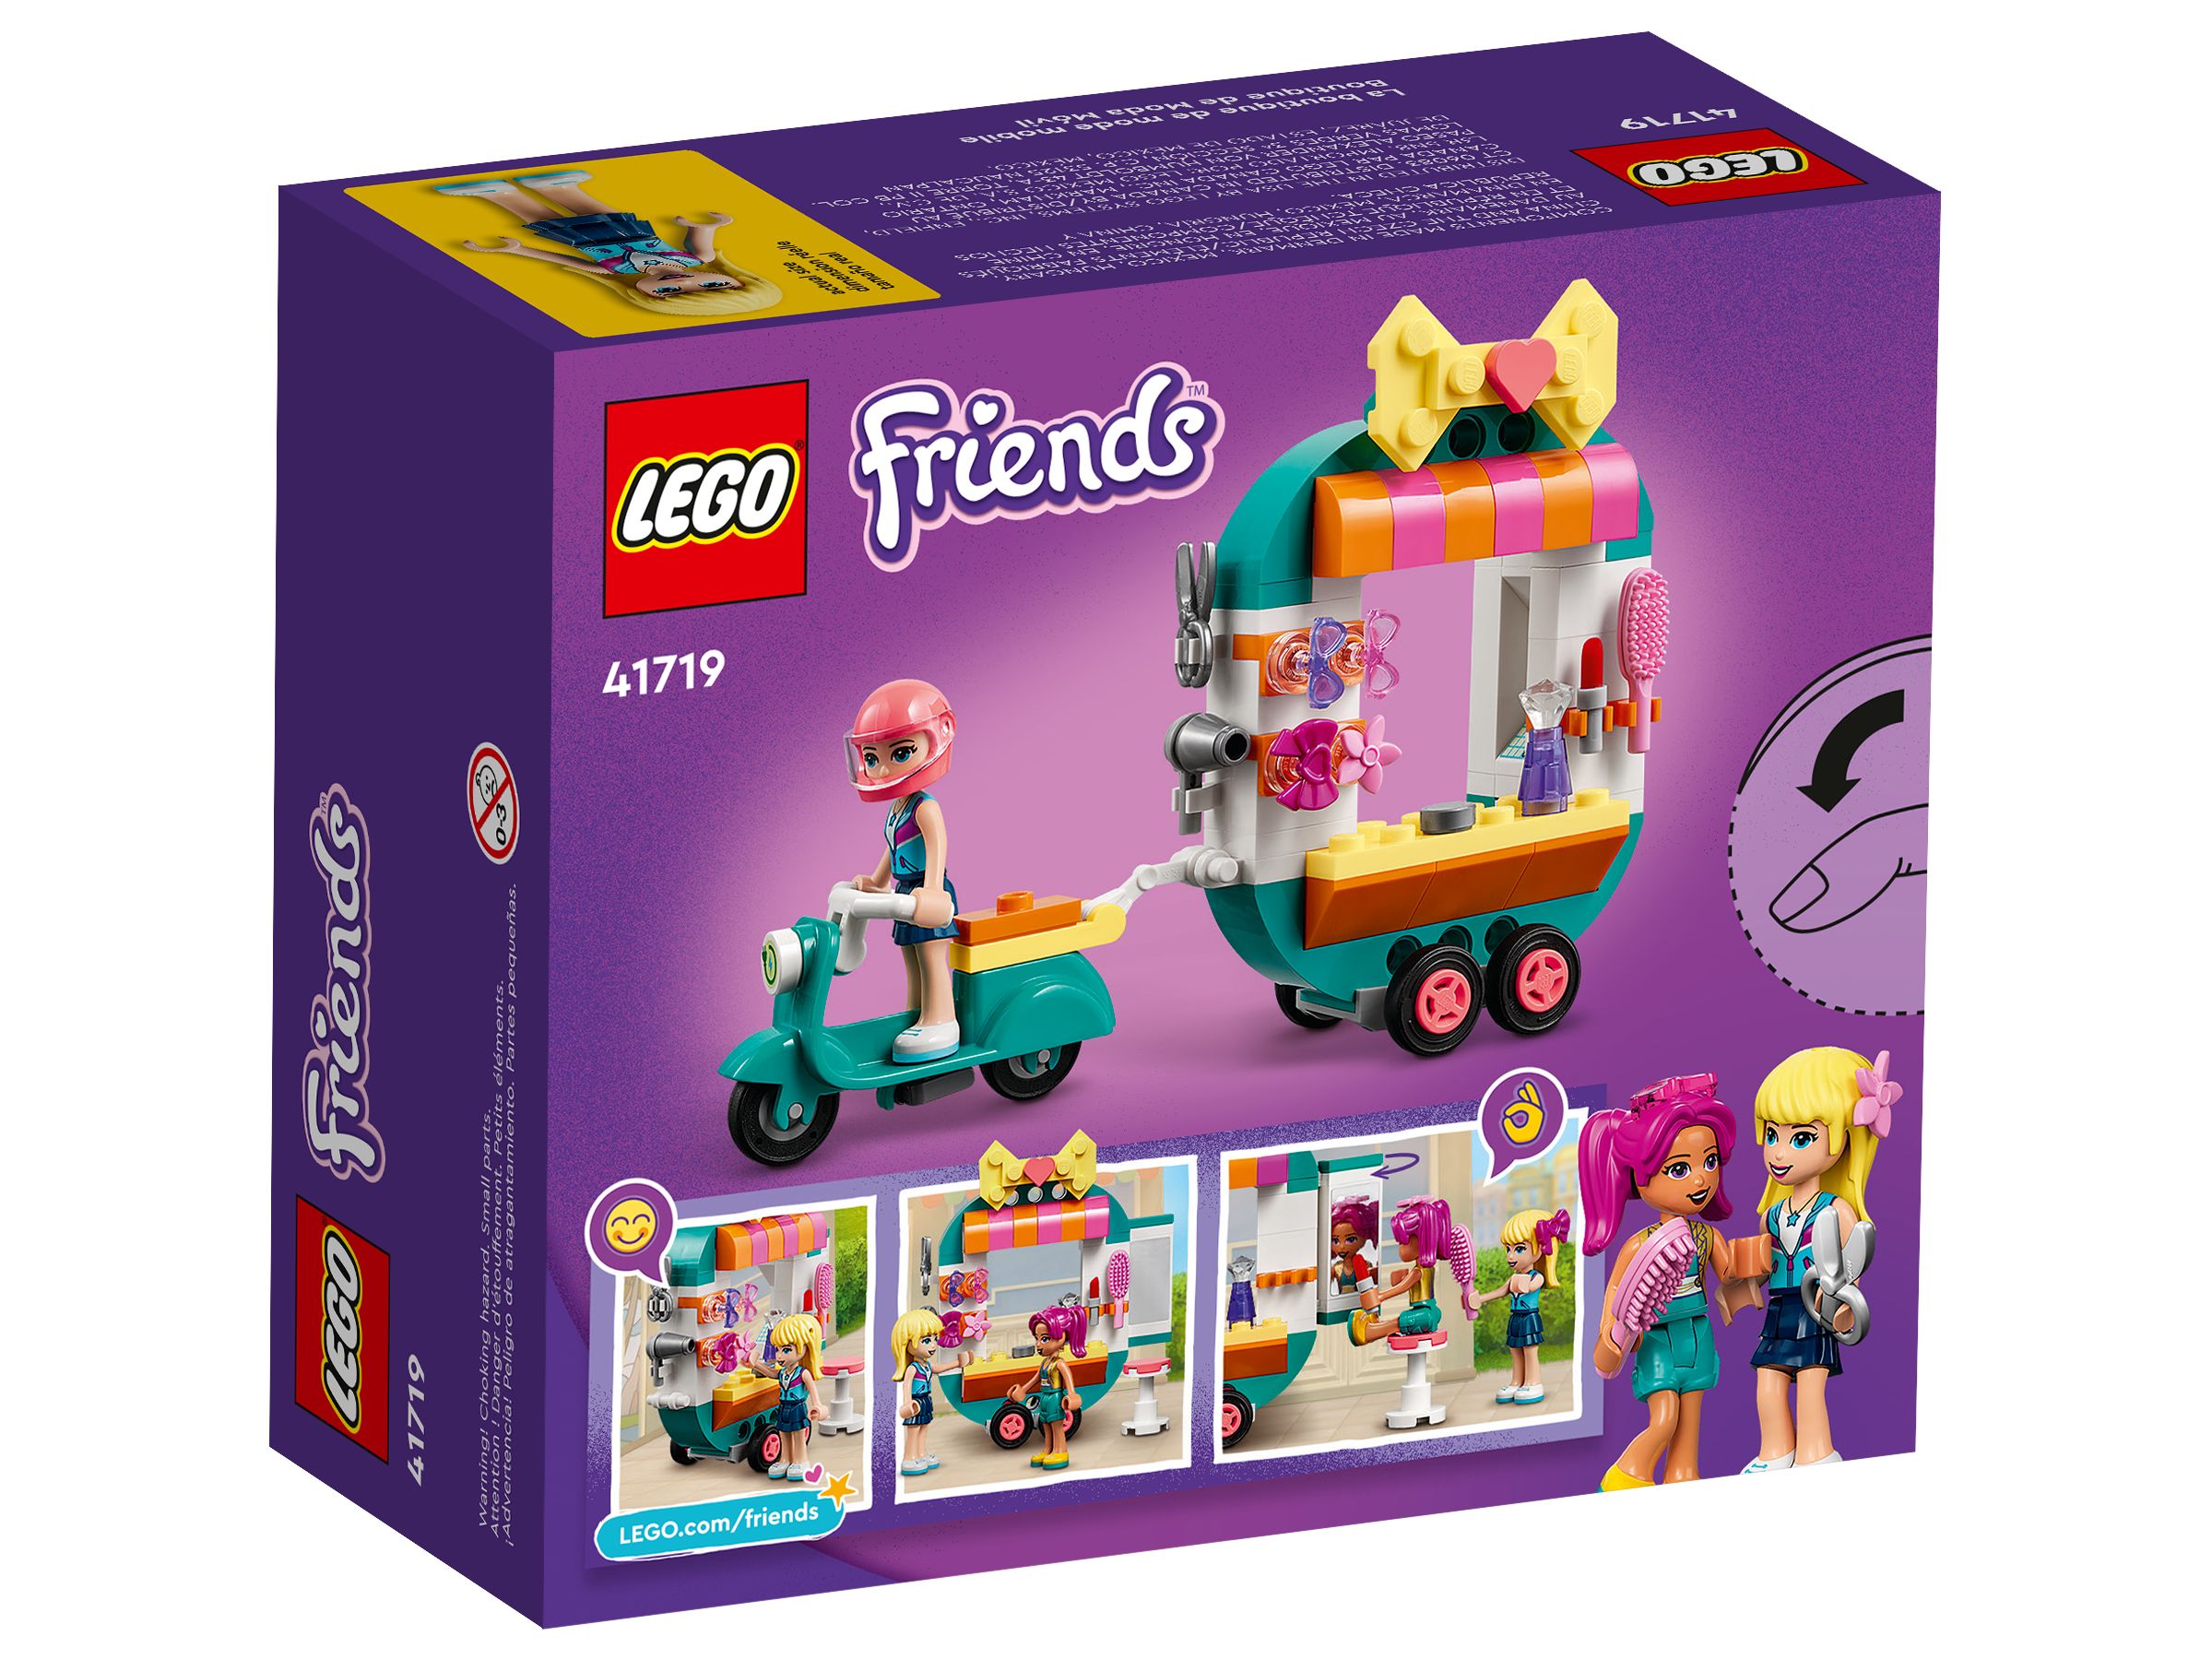 LEGO Friends 41719 Mobile Modeboutique LEGO_41719_alt5.jpg